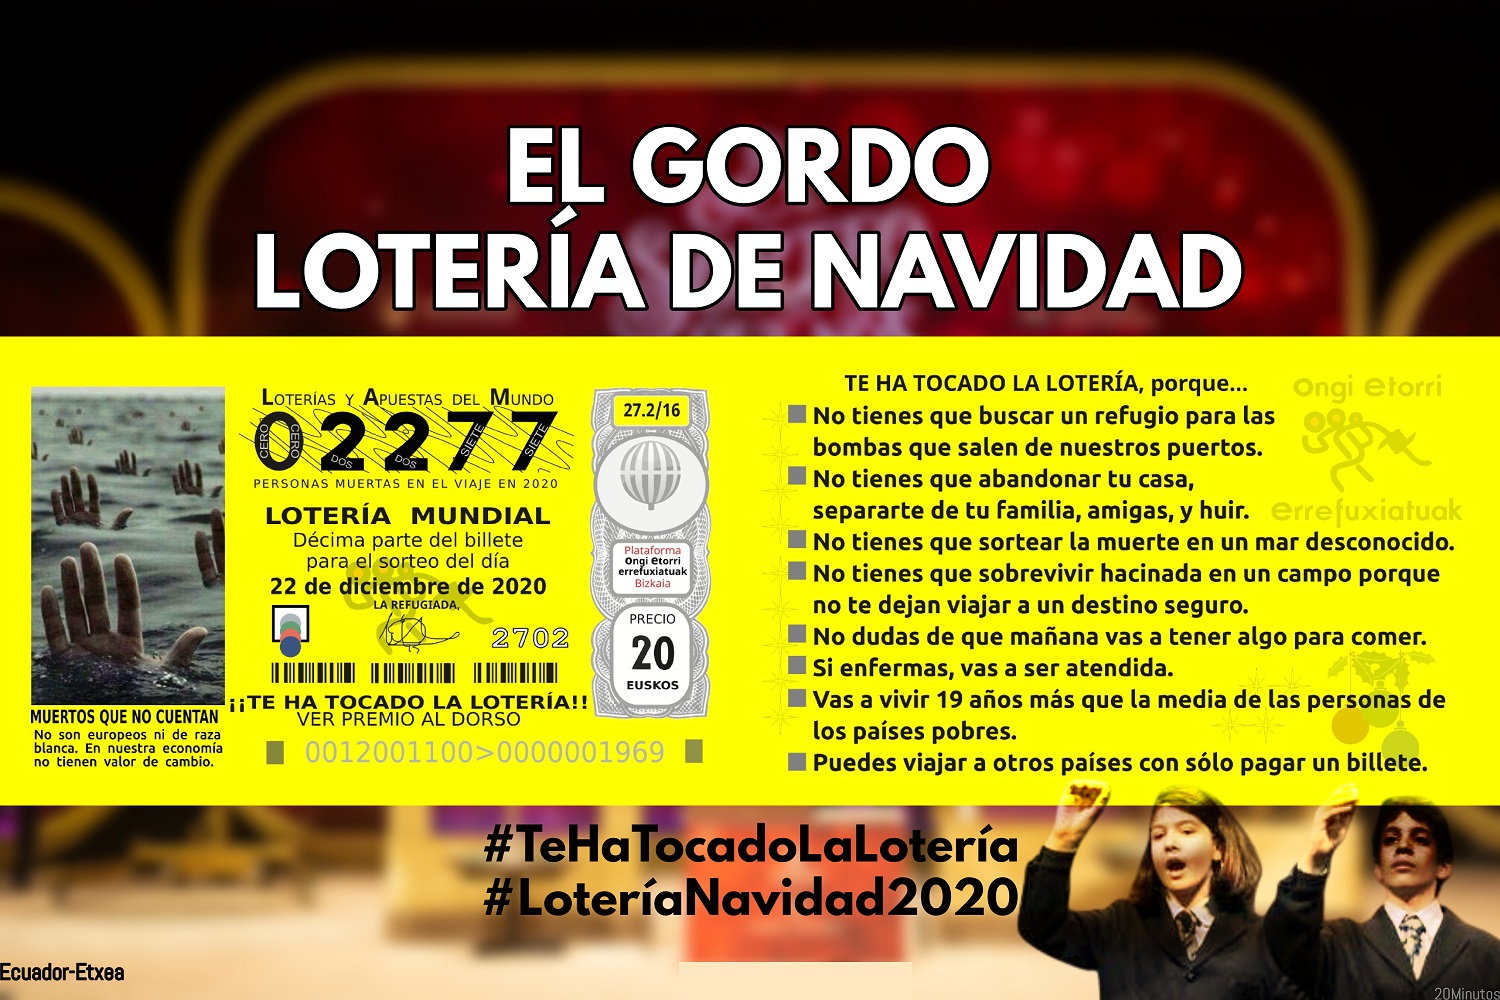 gordo-lotería-navidad-2020-nacional-02277-muertos-refugiados-migrantes-mediterráneo-ongietorri-vasco-bilbao-décimo